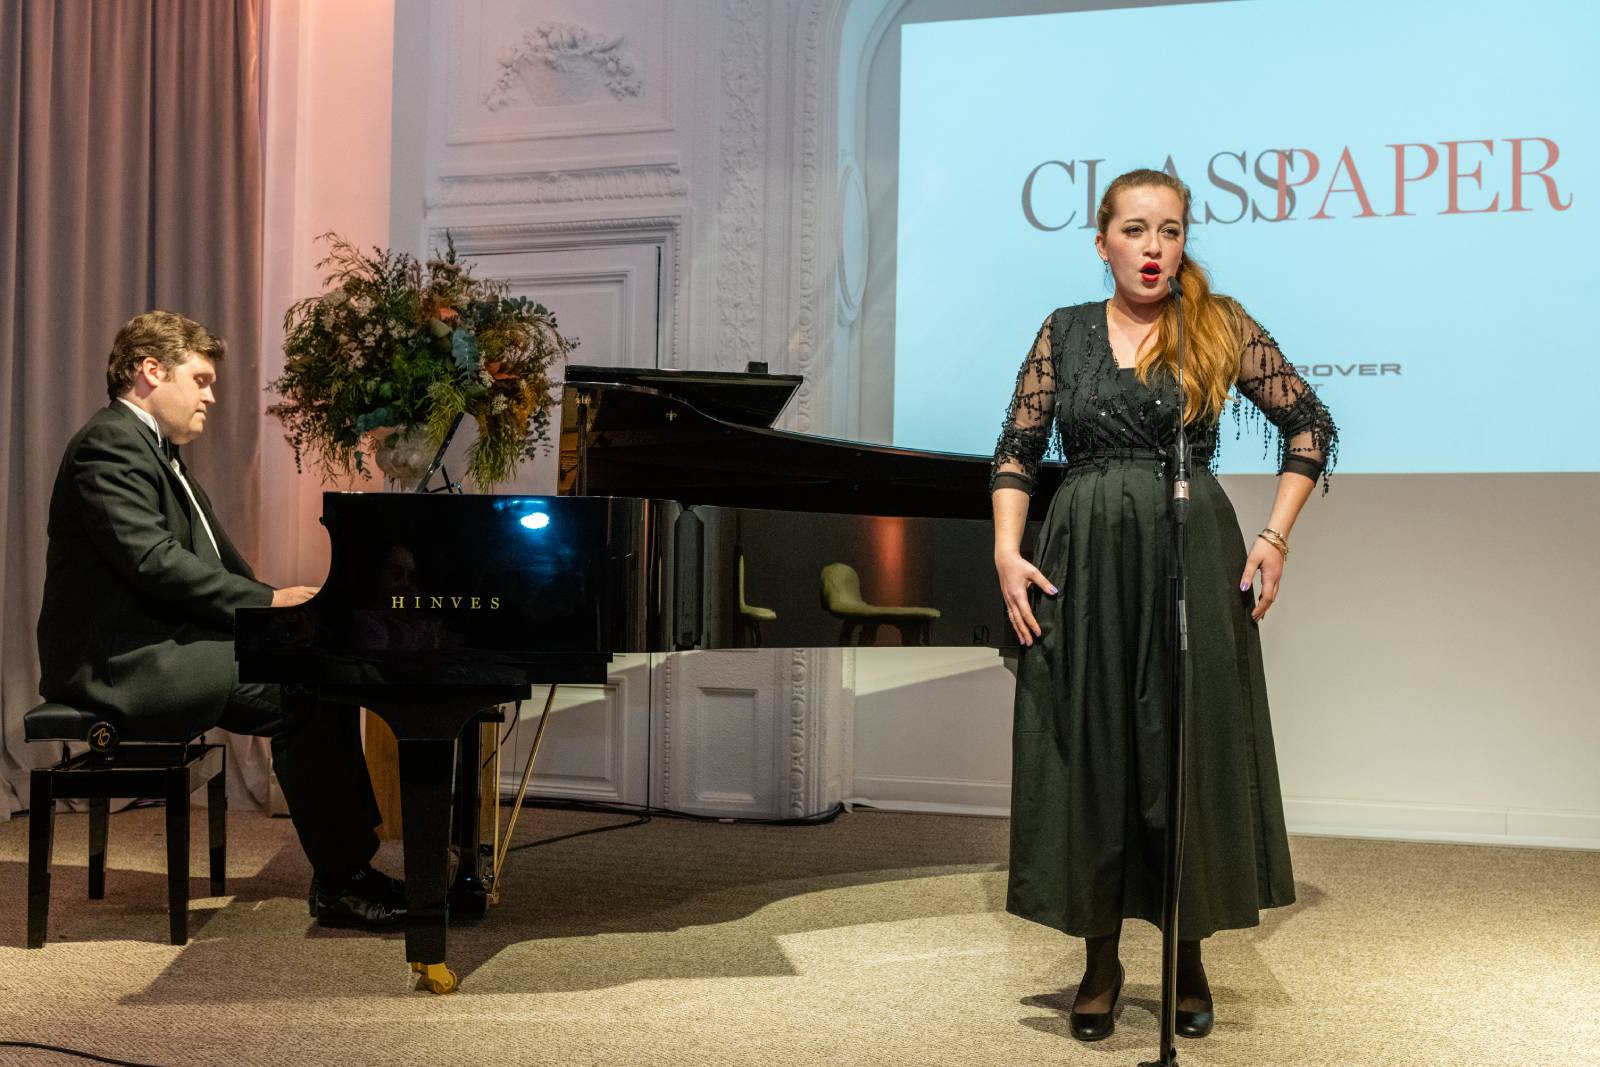 La soprano Rosa Gomariz interpreta el aria ‘Je veux vivre’, de la ópera ‘Romeo et Juliette’ de Charles Gounod junto al pianista ucraniano Andrey Yaroshinki. - imagen 9